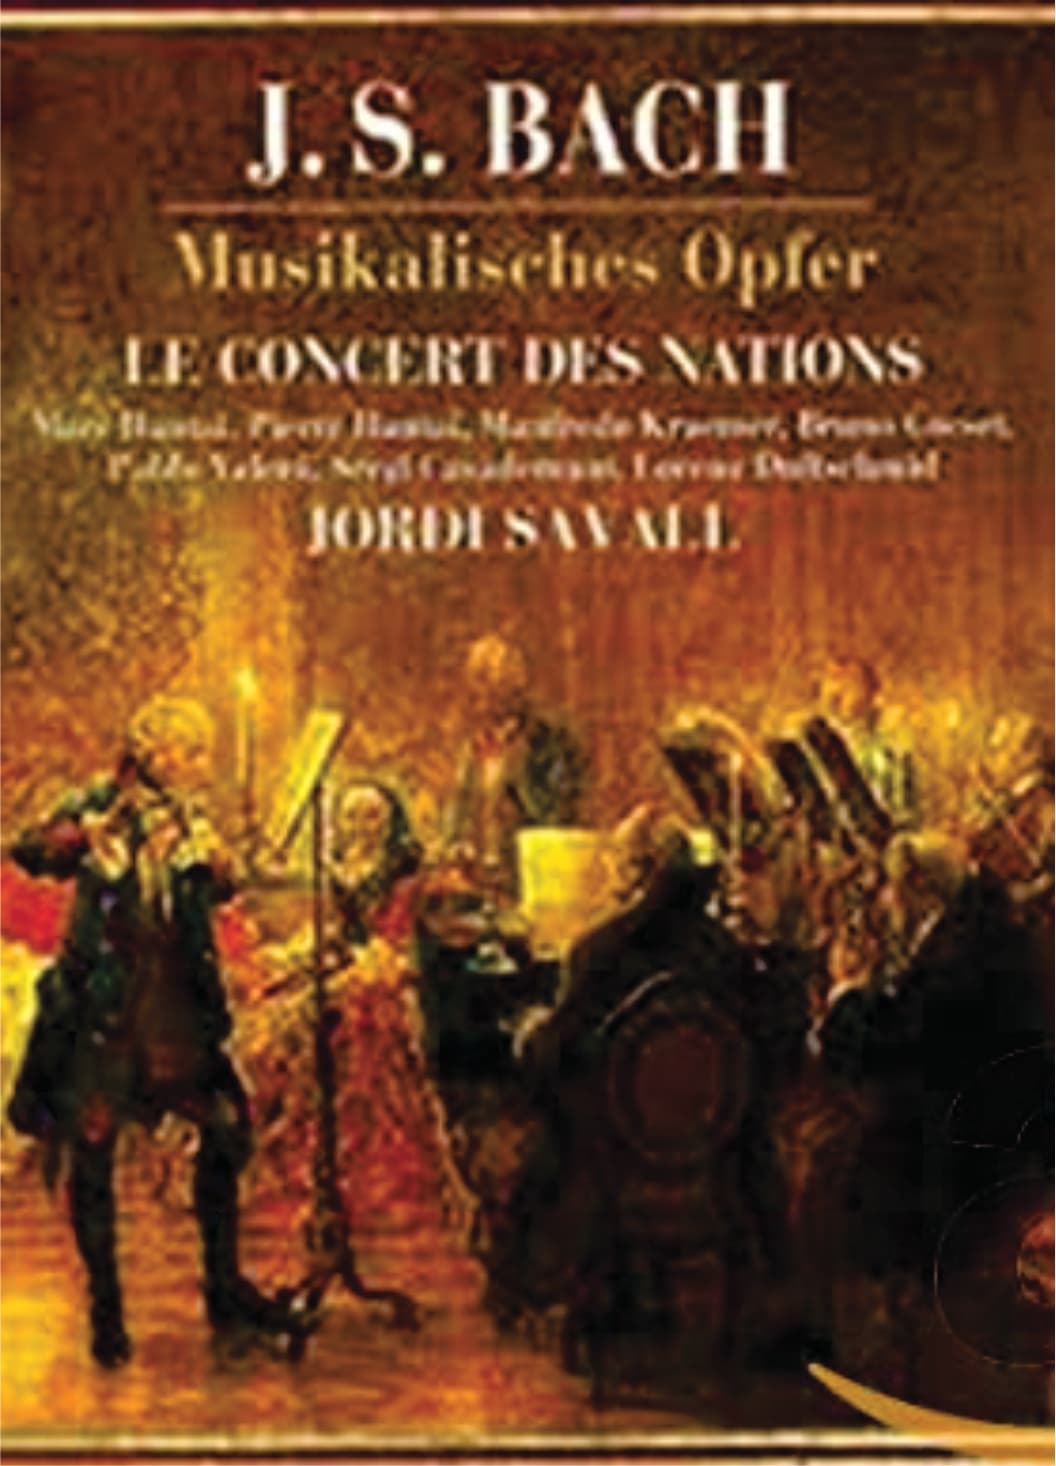 Bach BWV 1079 Musical Offering Jordi Savall Concert des Nations